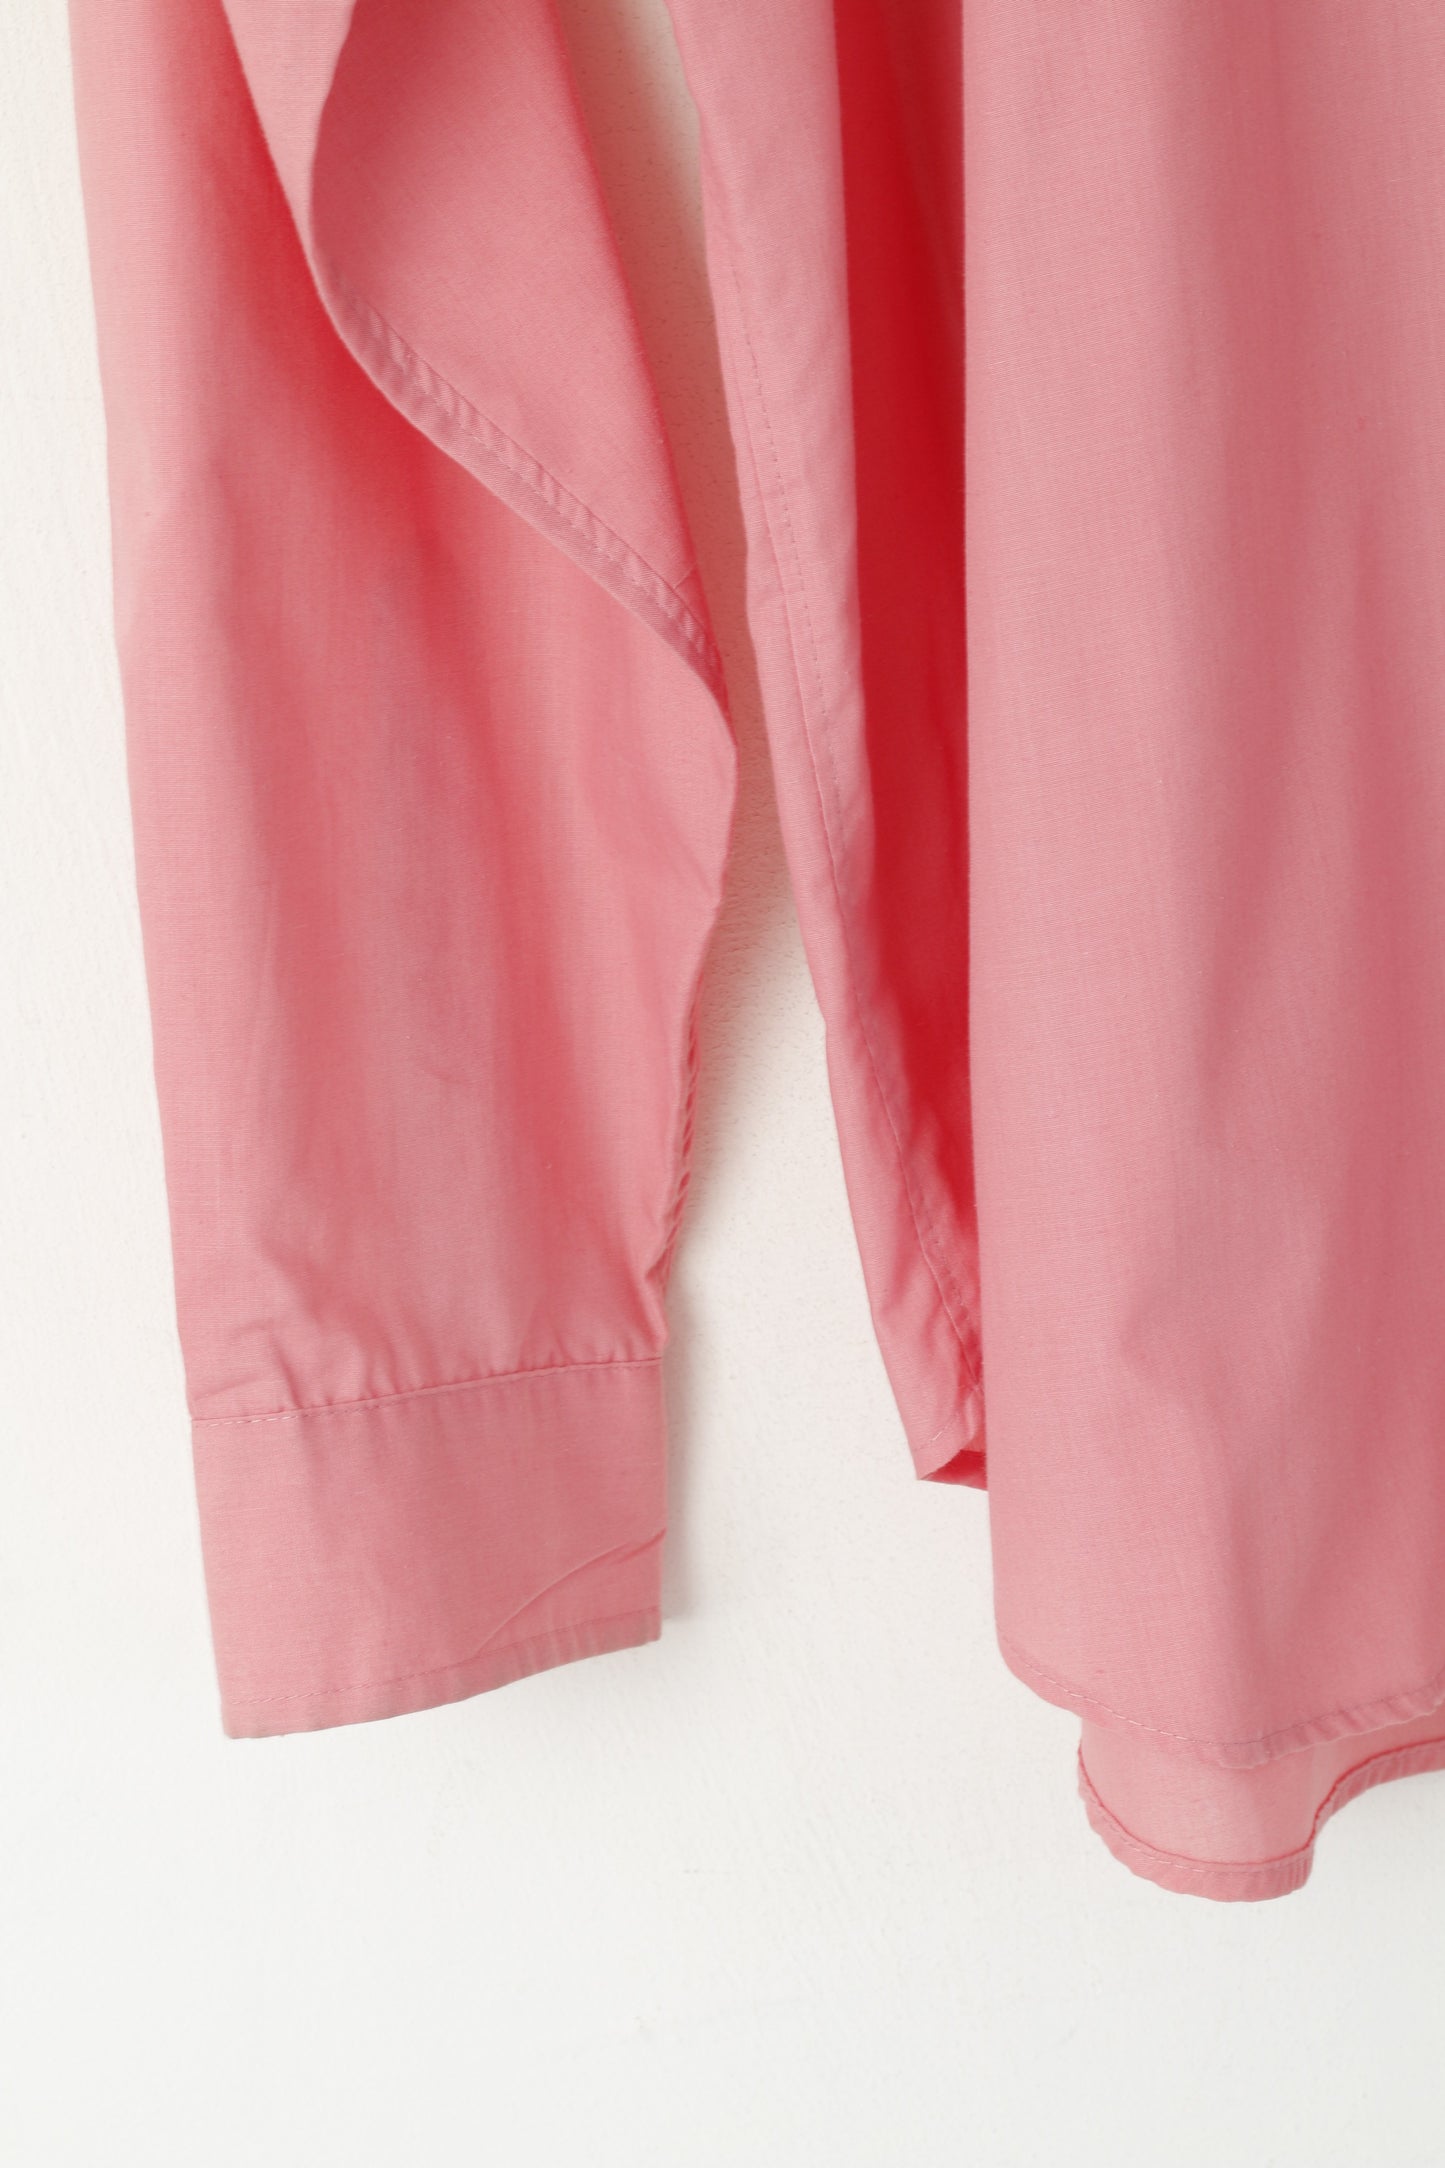 Polo By Ralph Lauren Men 16.5 XL Casual Shirt Pink Cotton Yarmouth Long Sleeve Top